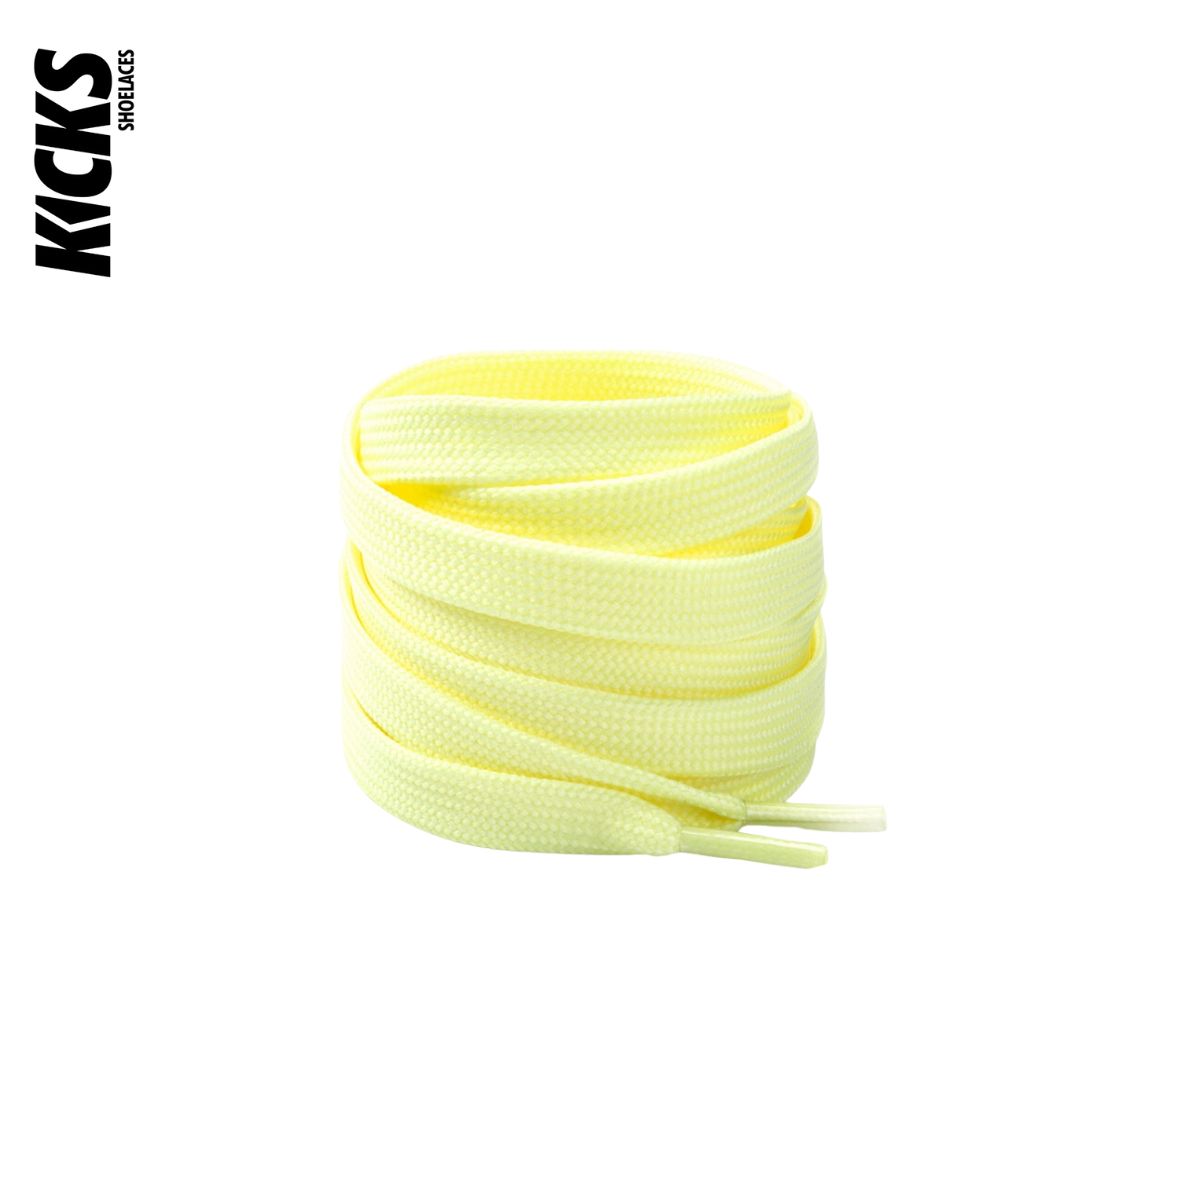 Light Yellow Nike Dunks Shoelace Replacements - Kicks Shoelaces